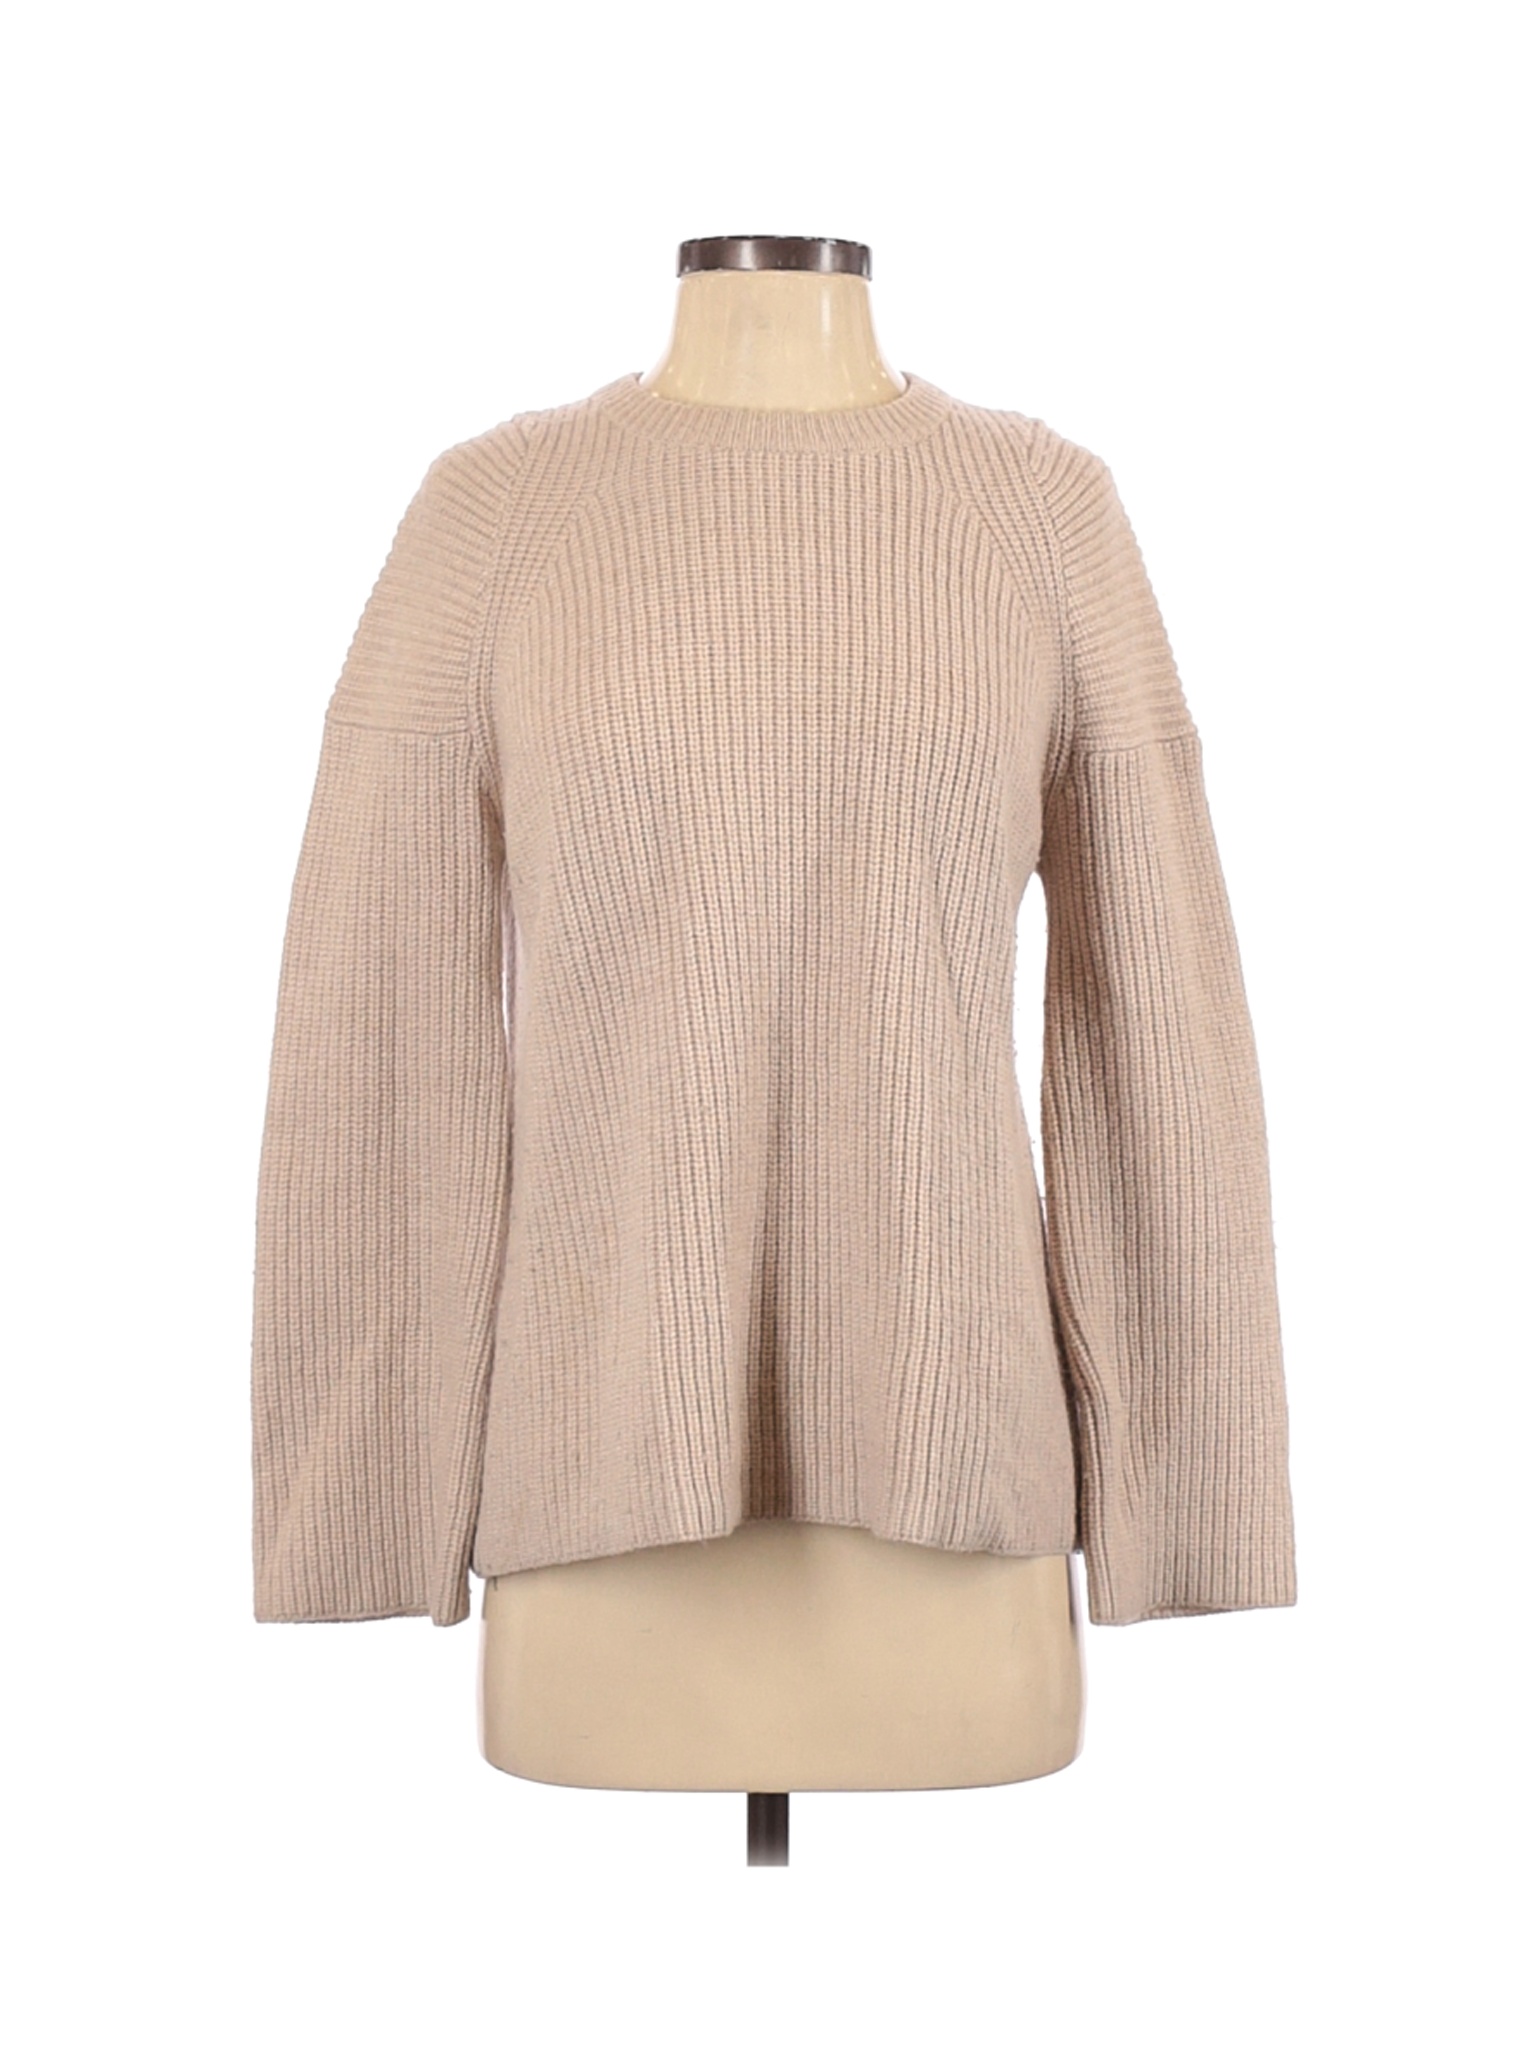 ALLSAINTS Women Brown Pullover Sweater XS | eBay